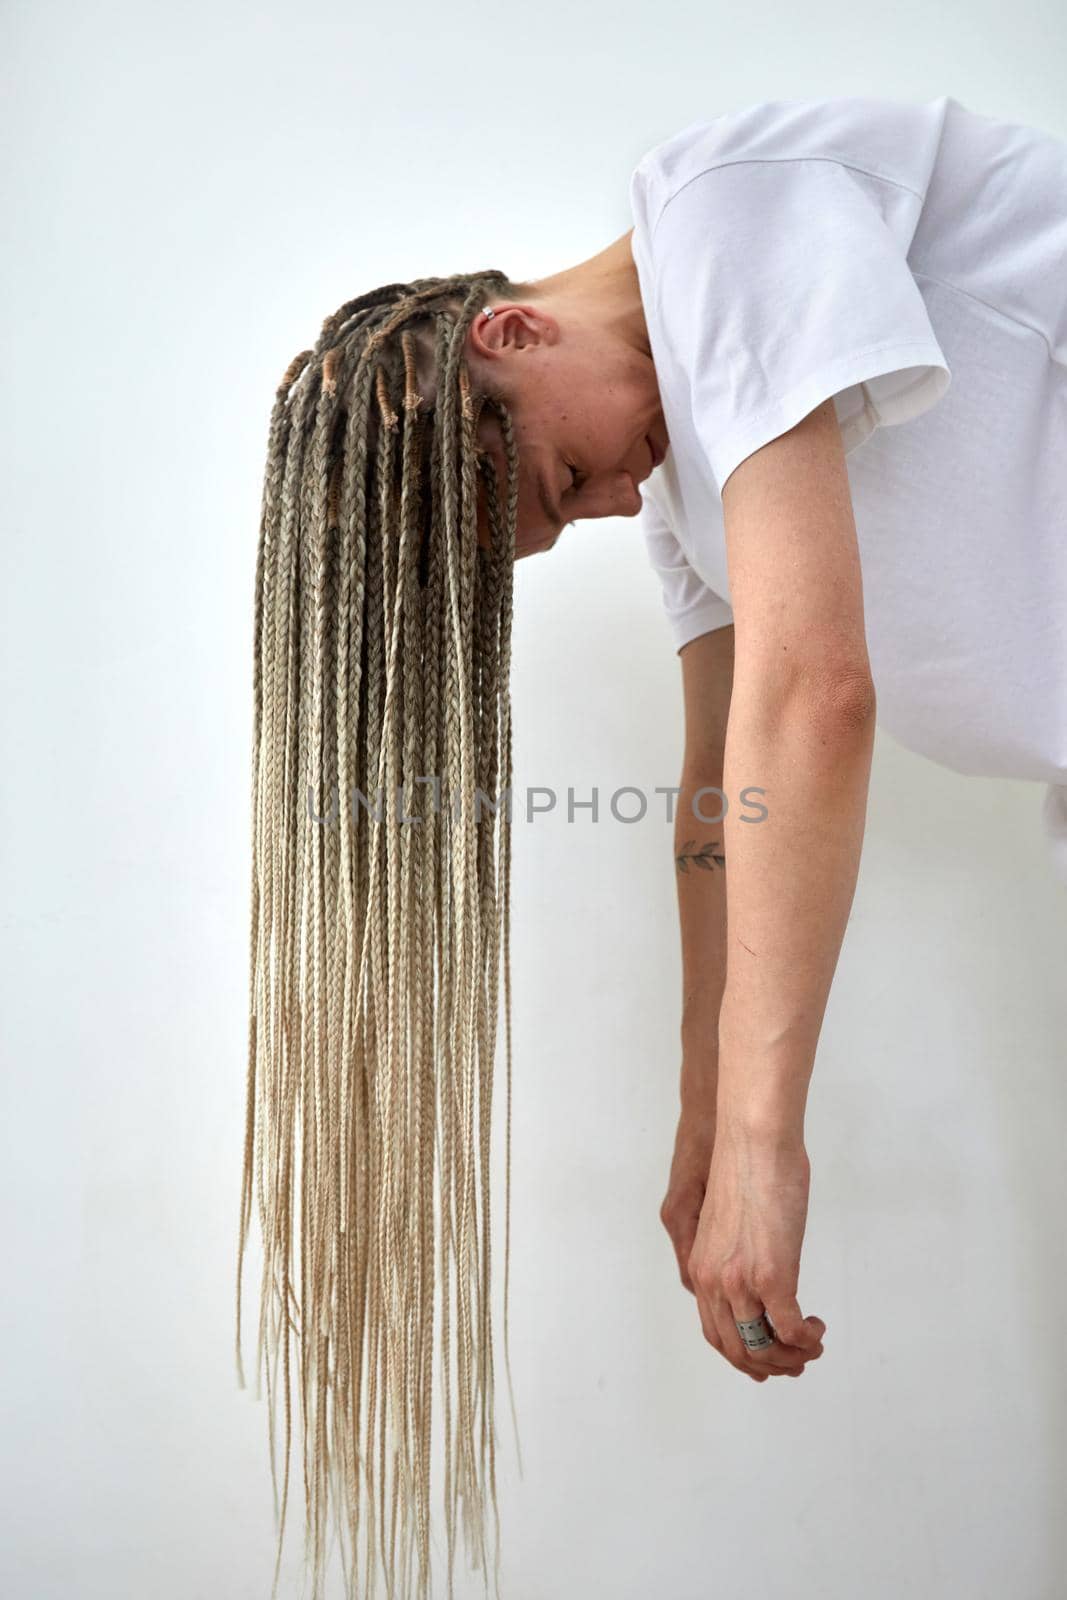 Woman with long braids bending head down by Demkat